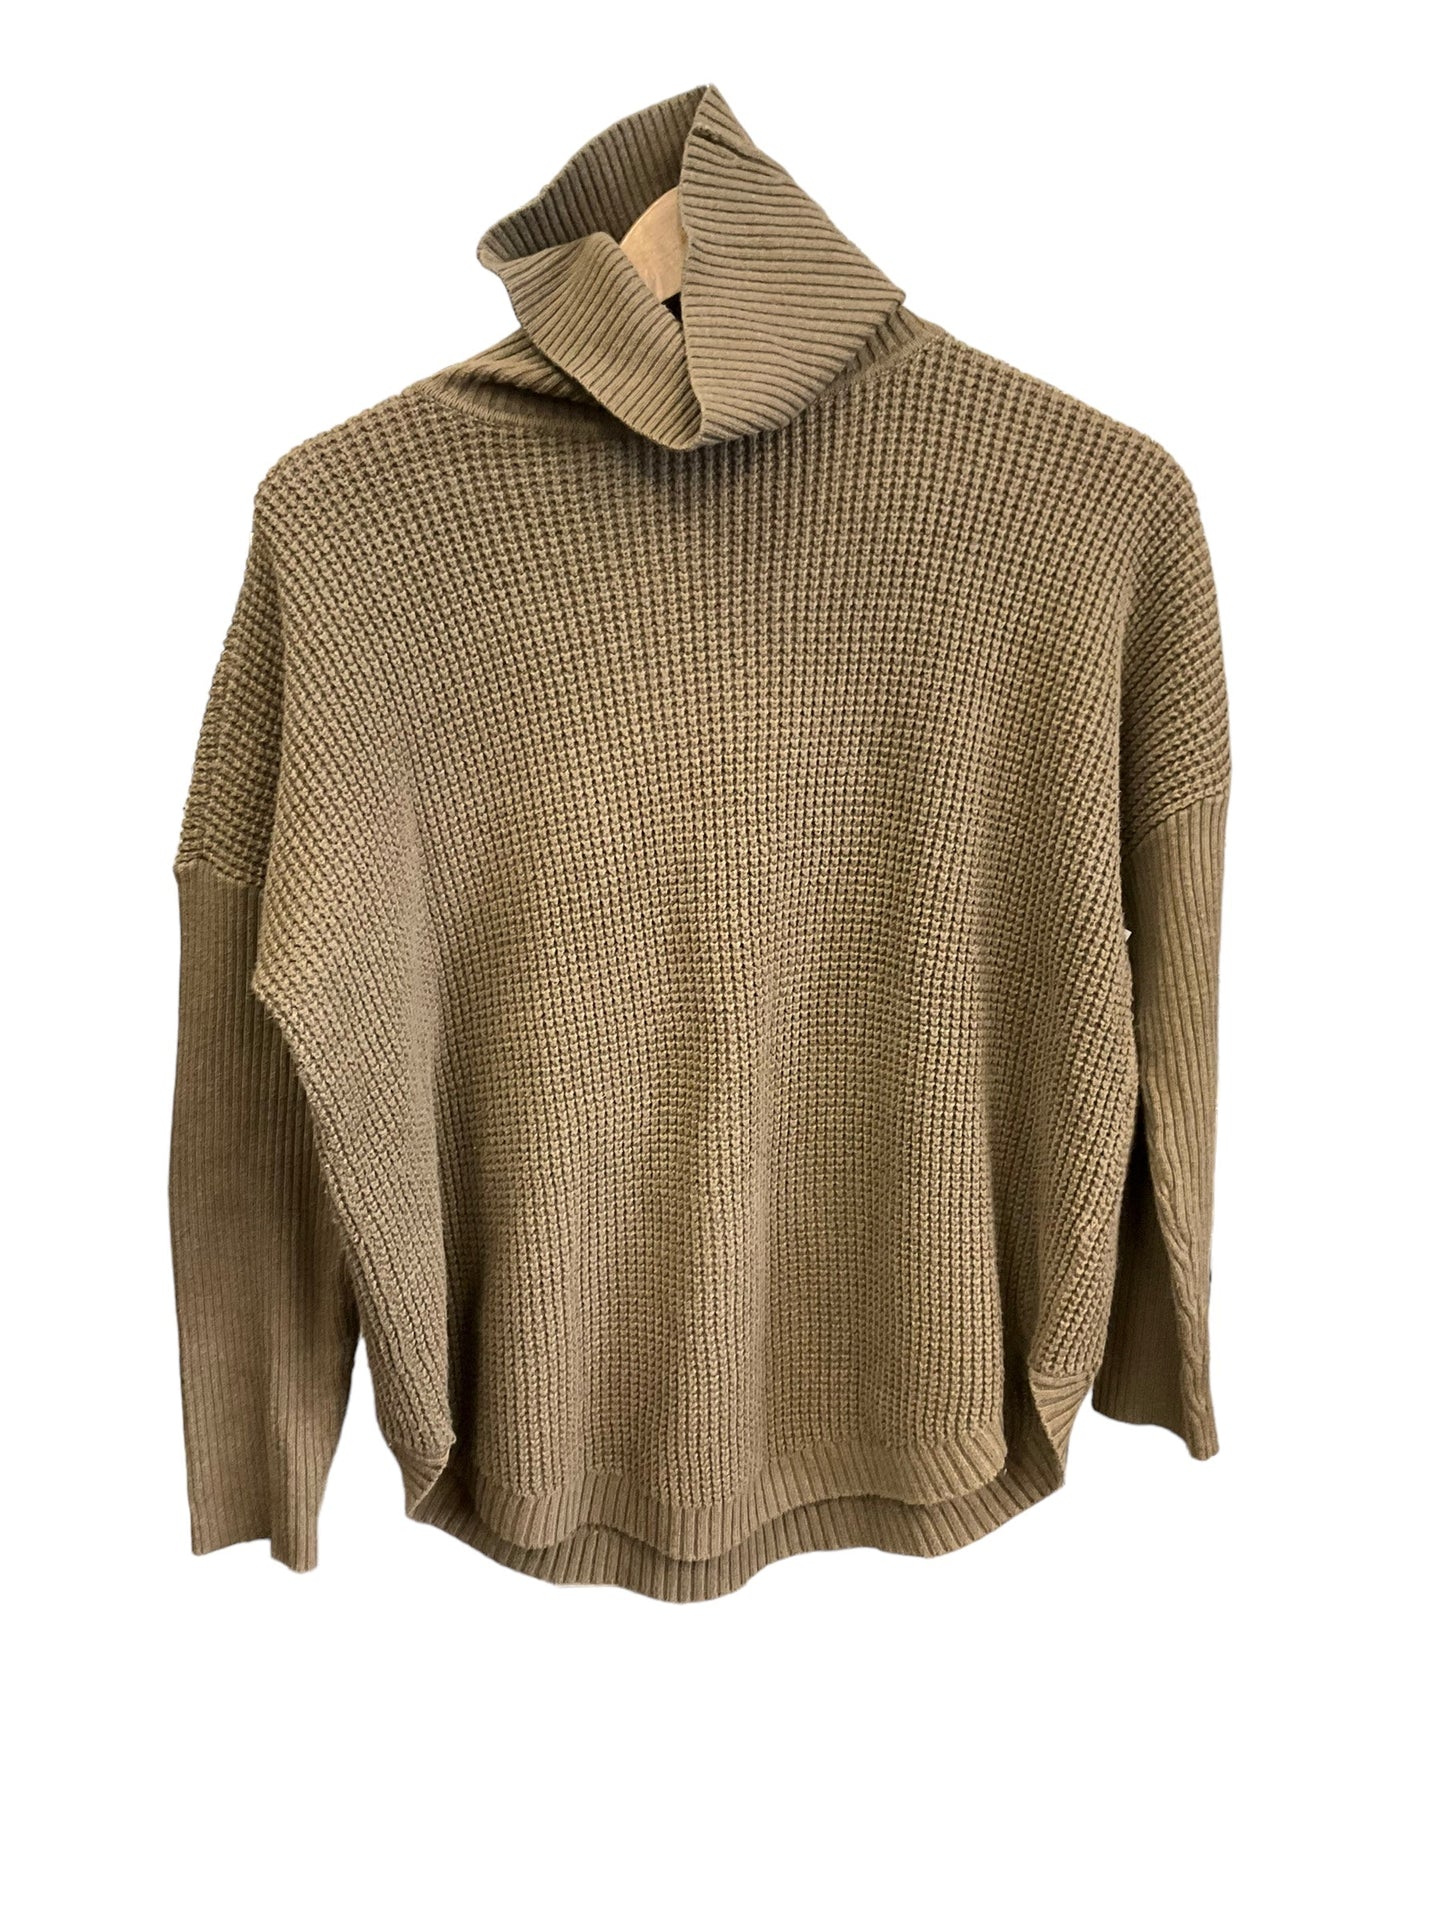 Sweater Designer By Michael Kors  Size: M